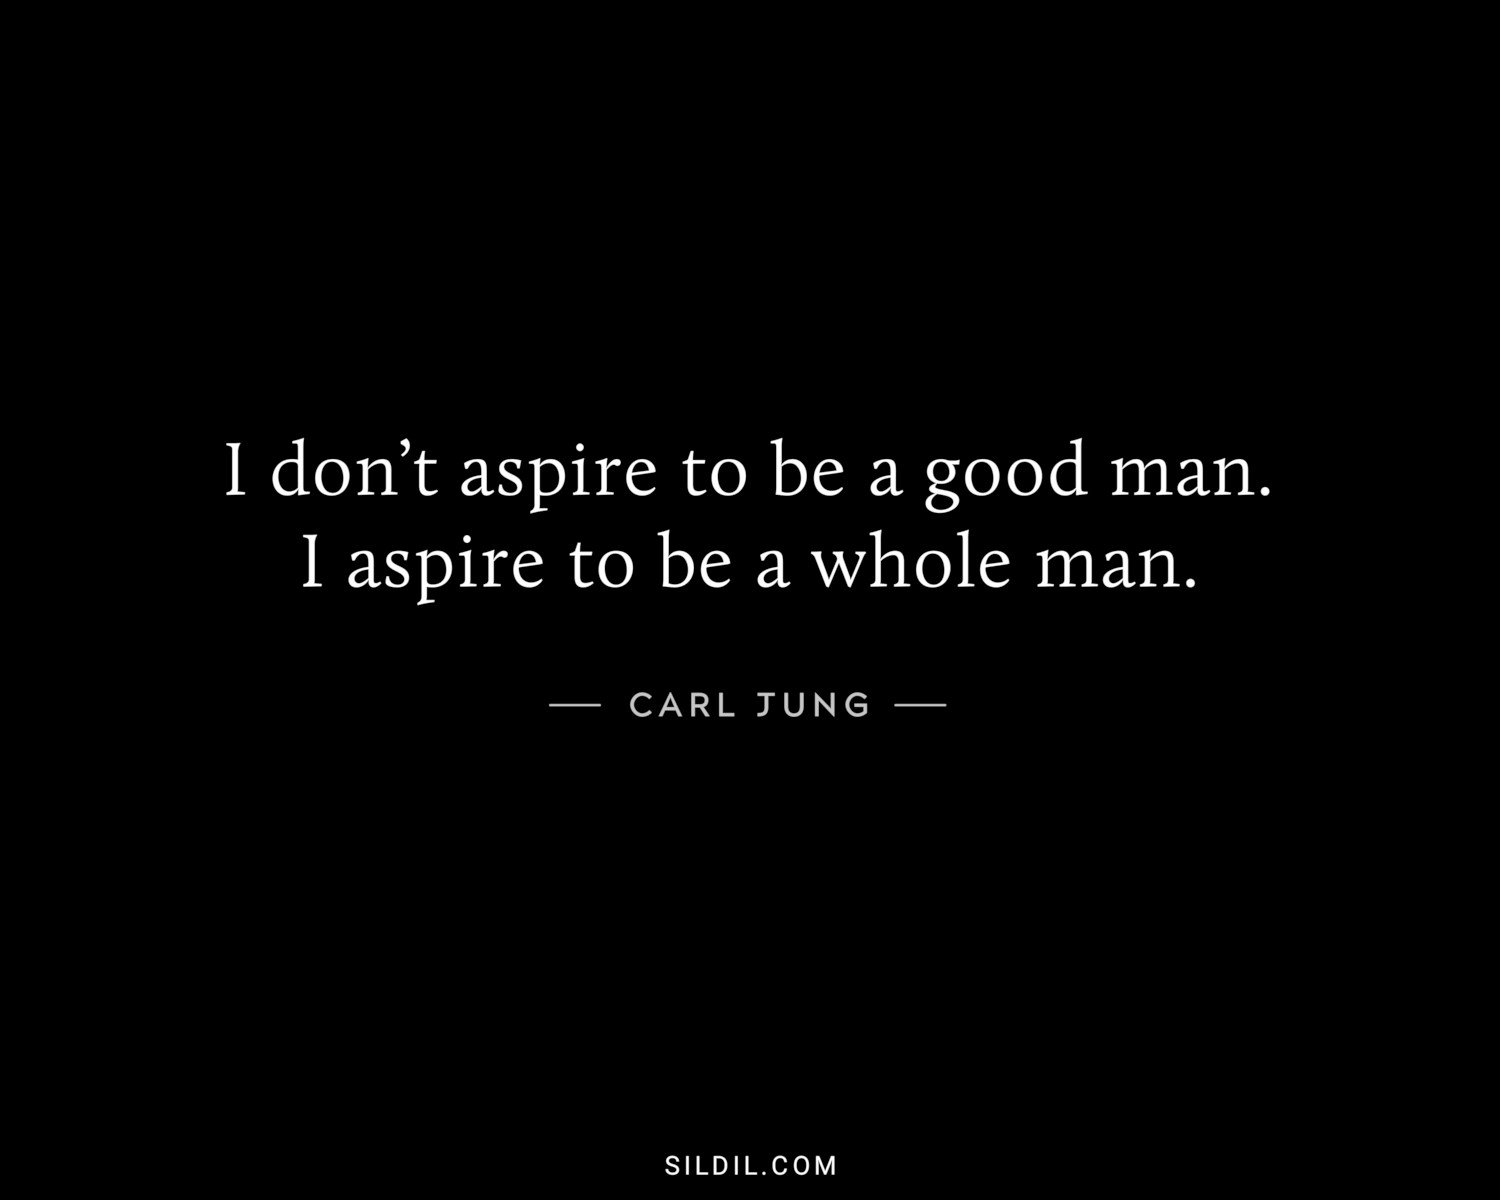 I don’t aspire to be a good man. I aspire to be a whole man.